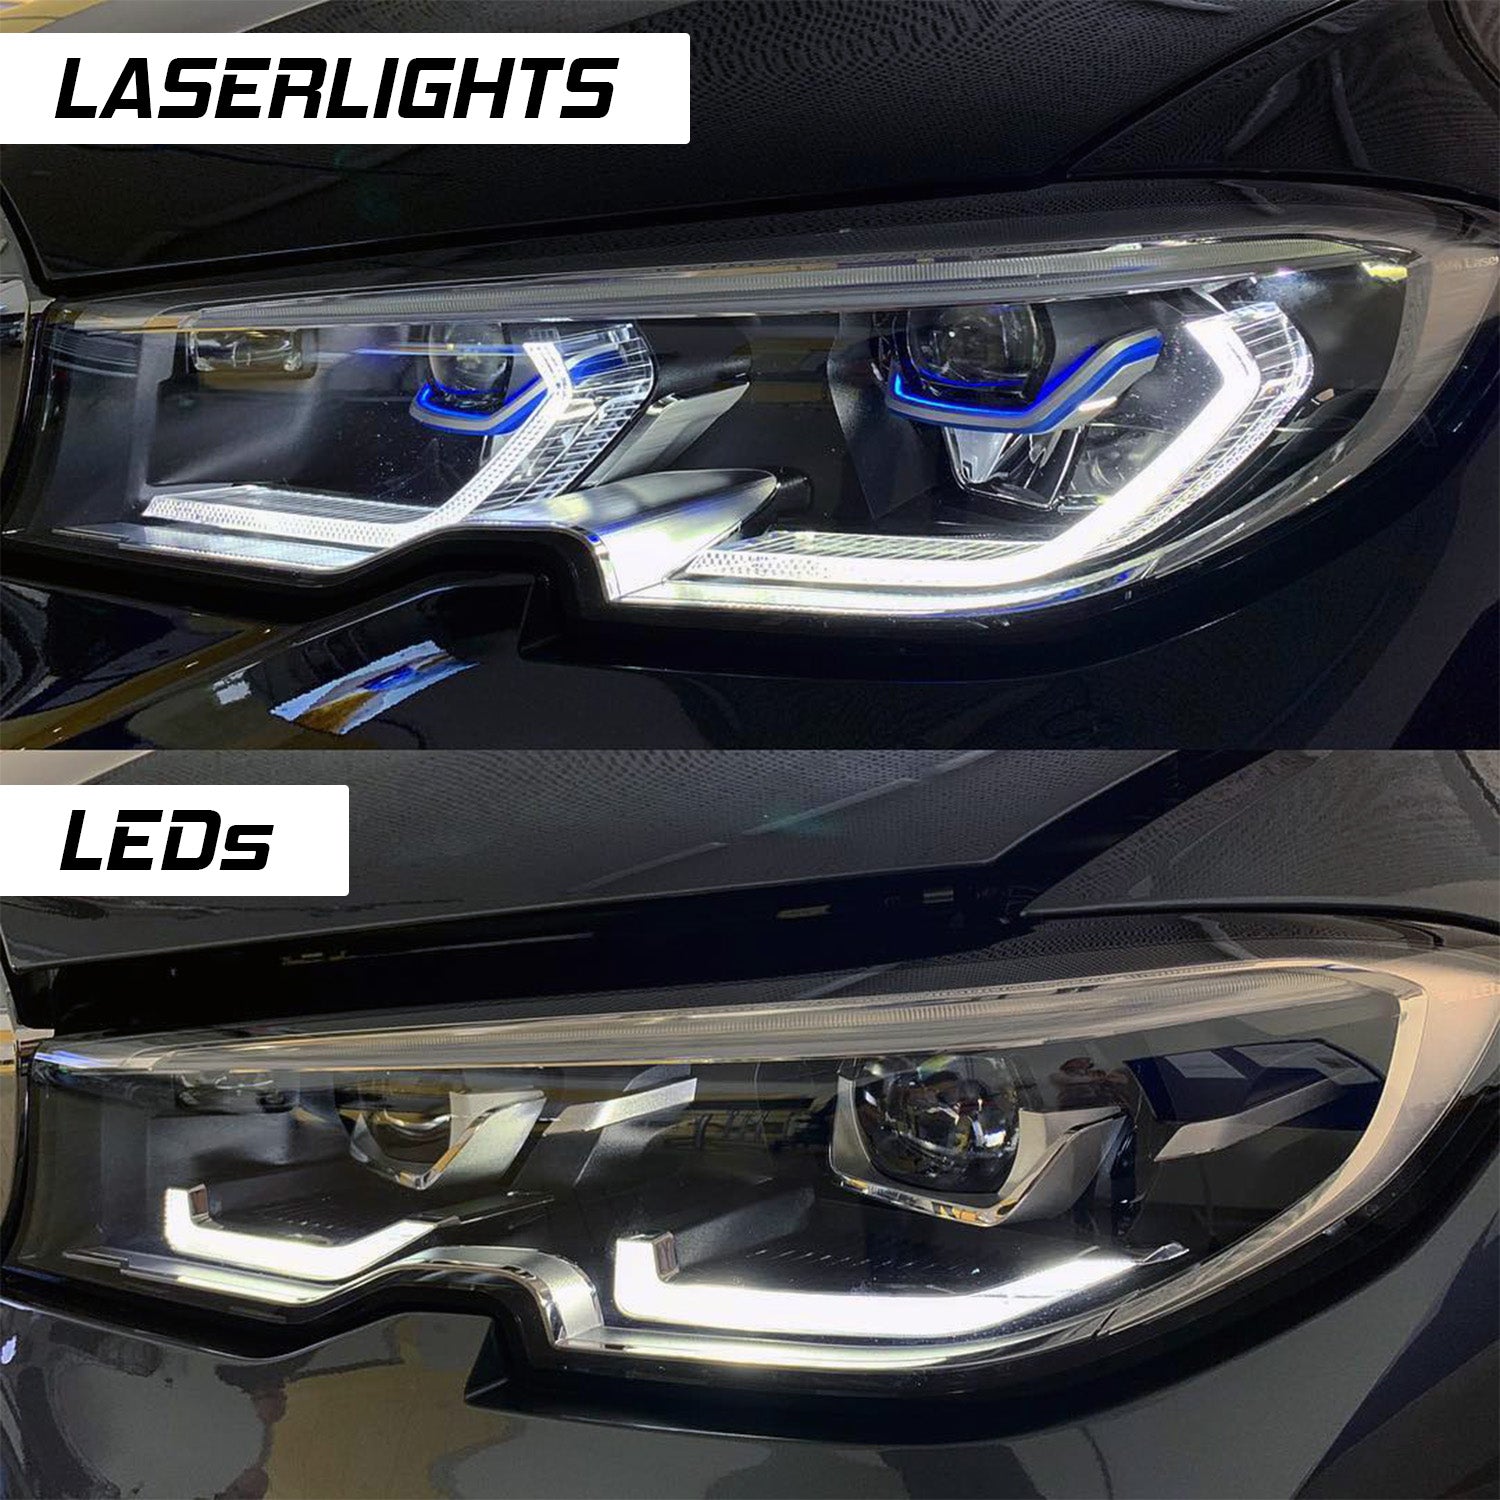 R44 BMW G20 3 Series Laserlights Vs LEDs